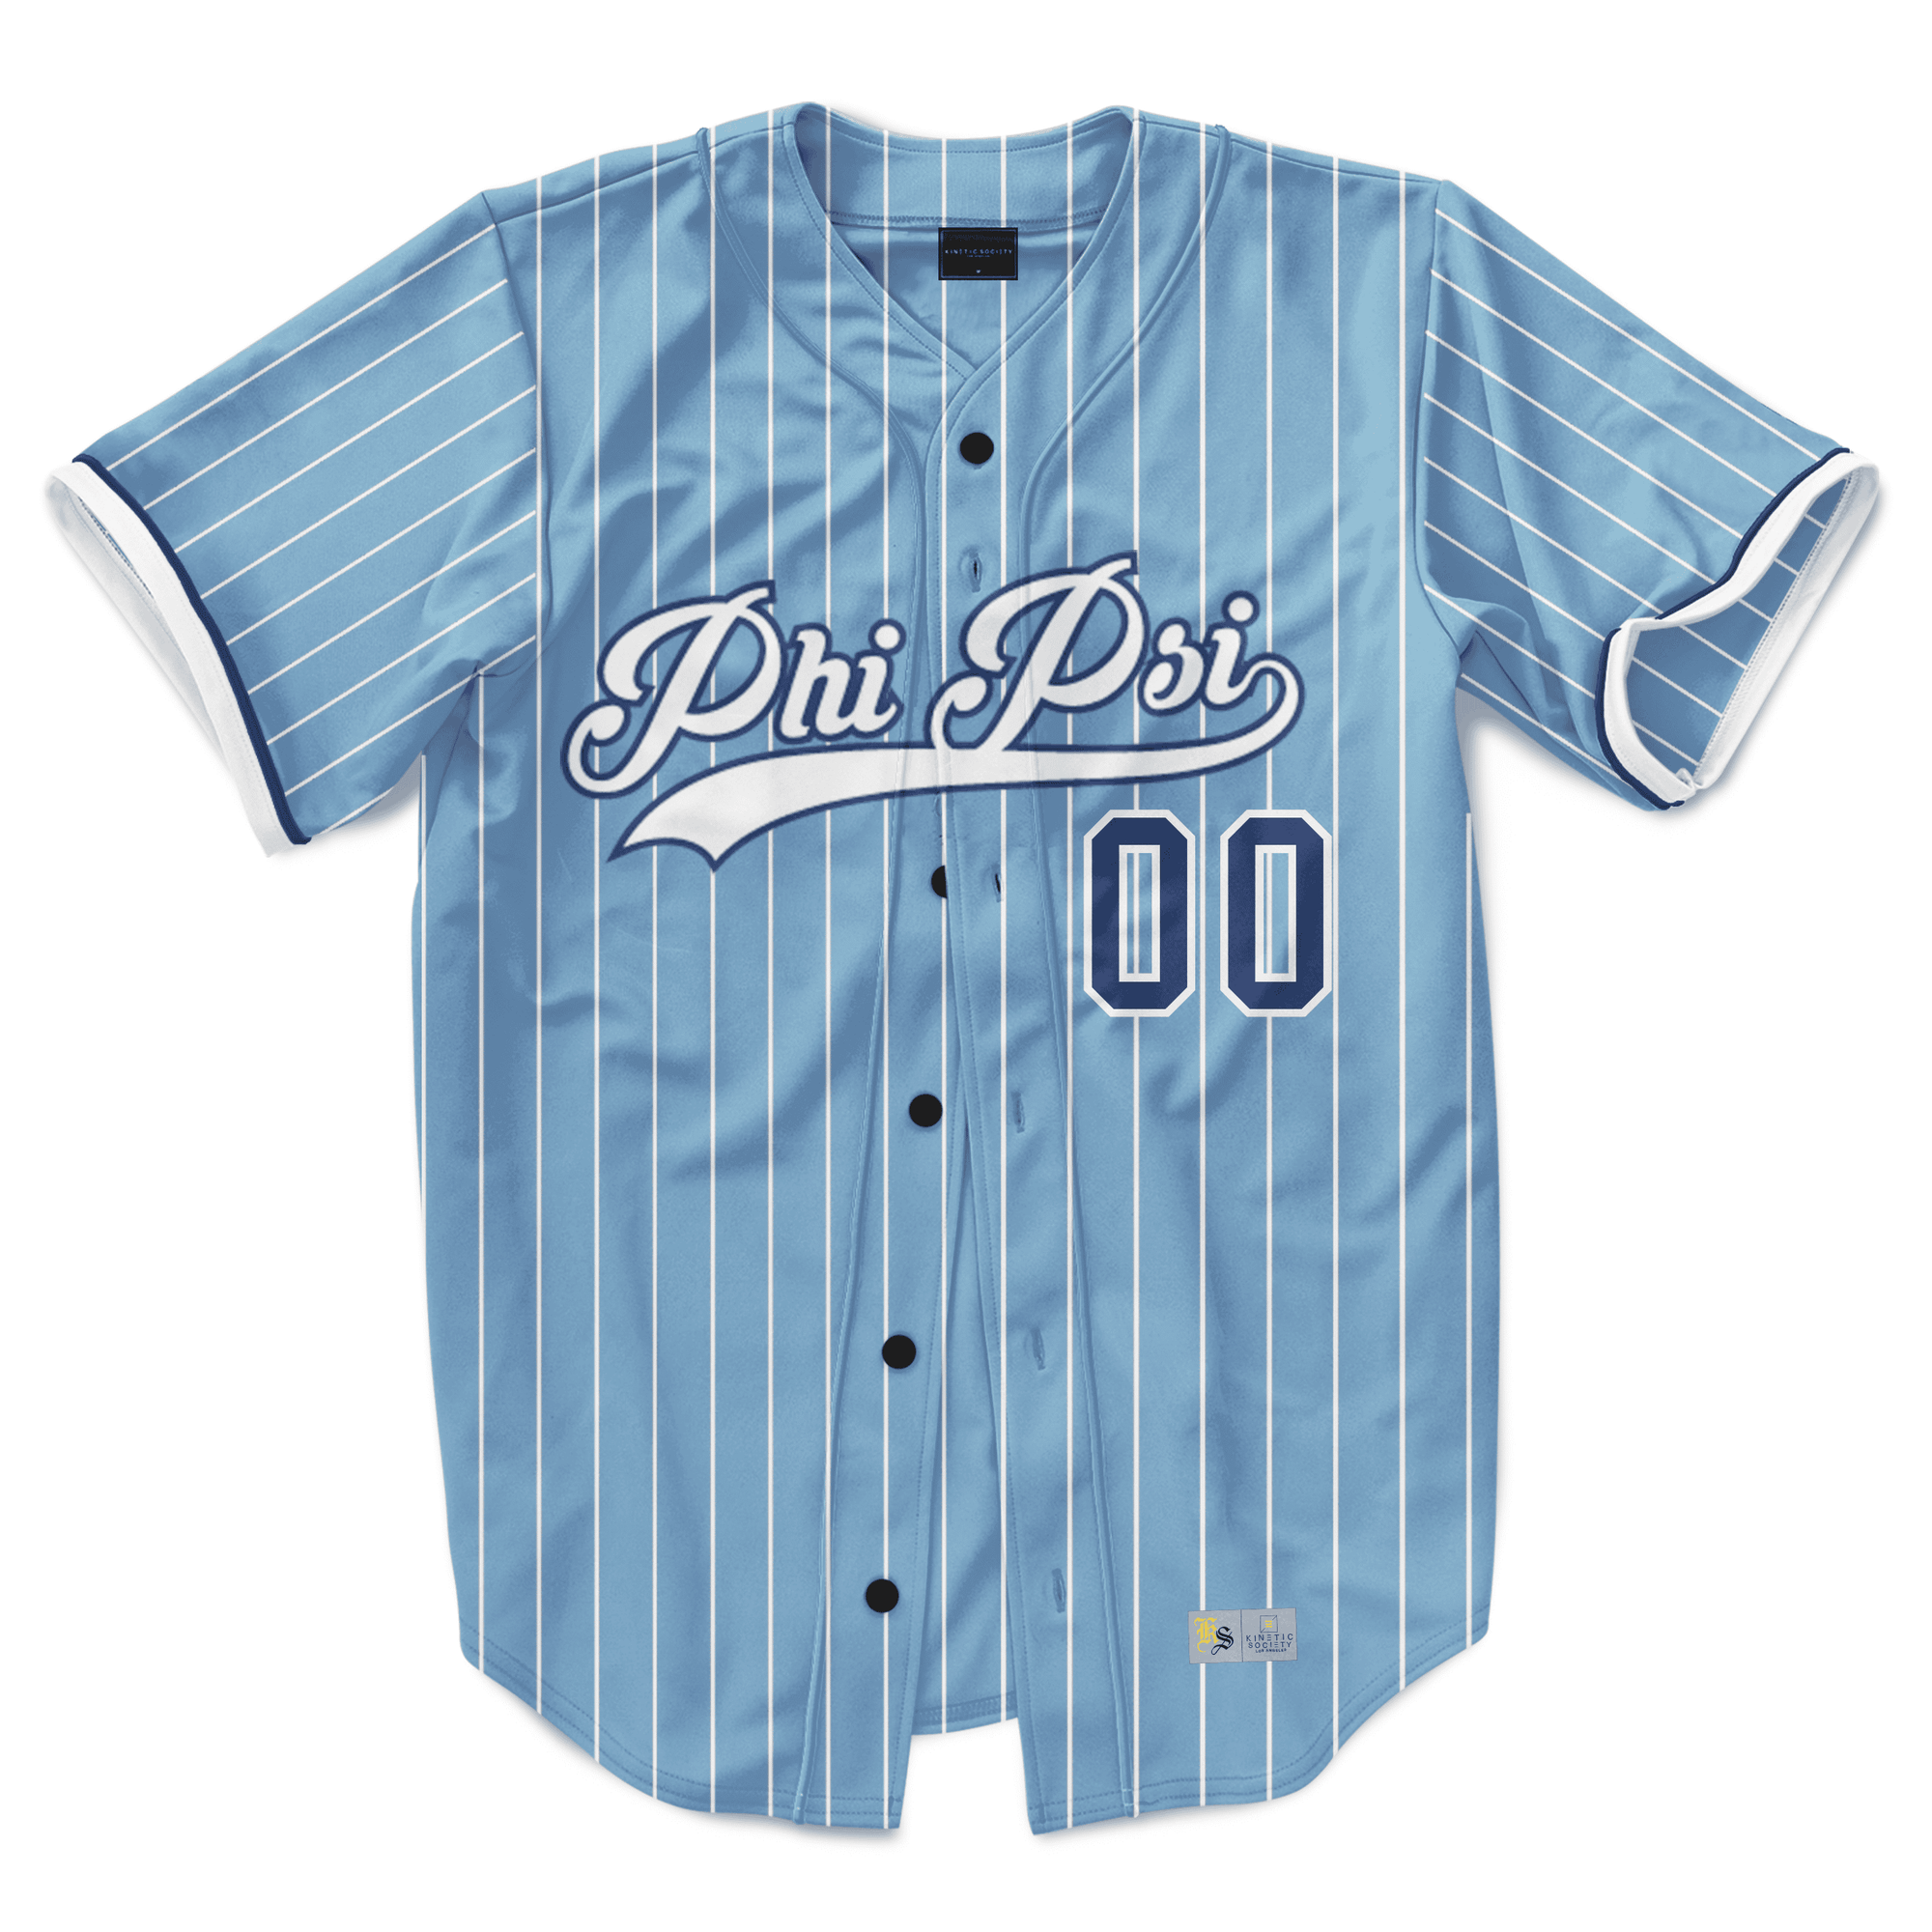 Phi Kappa Psi - Blue Shade Baseball Jersey